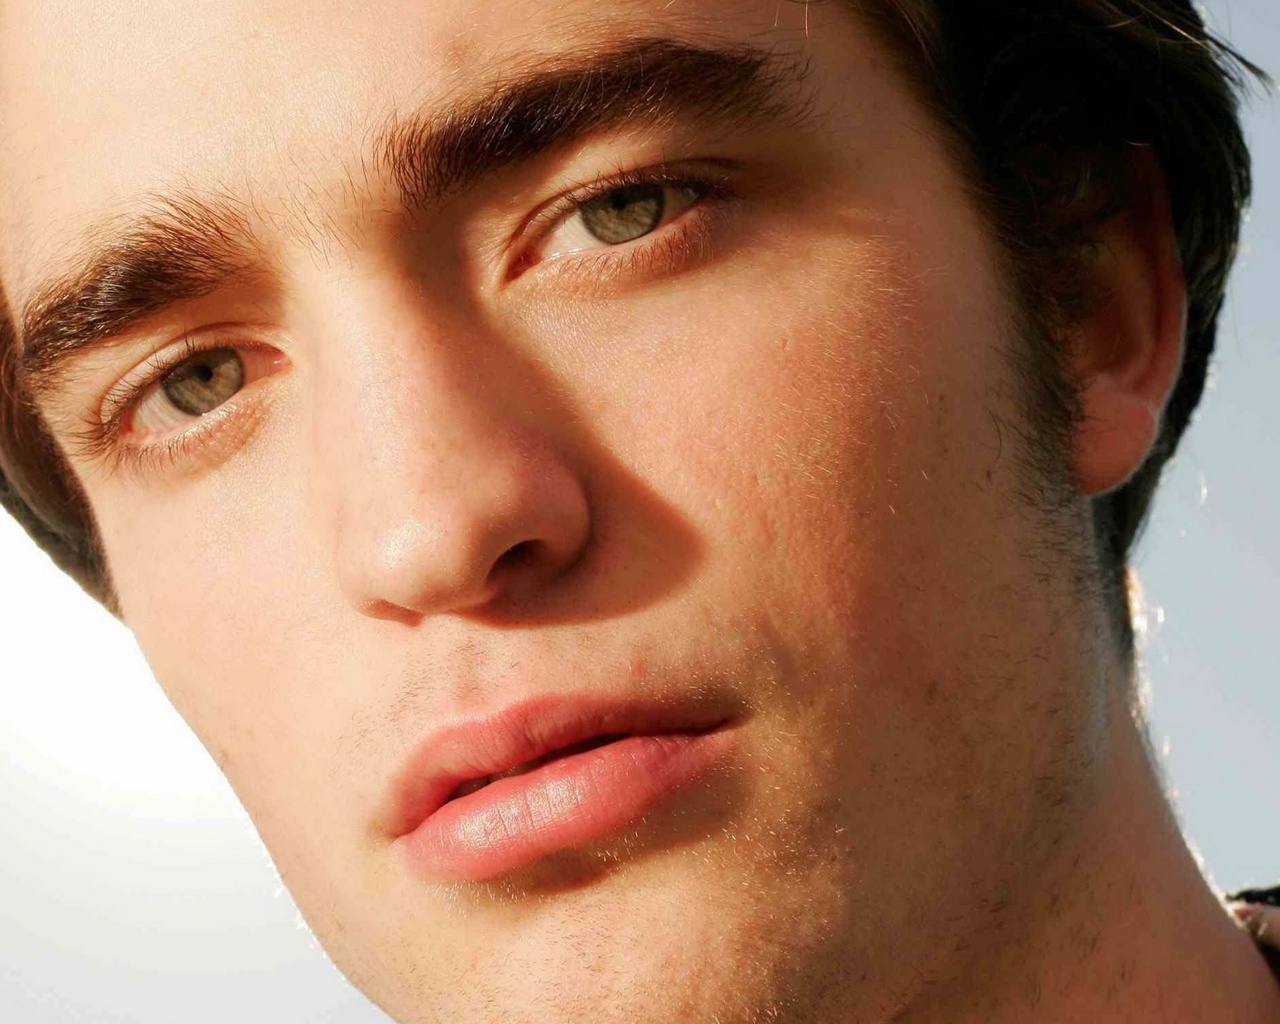 Robert Pattinson Close-up for 1280 x 1024 resolution